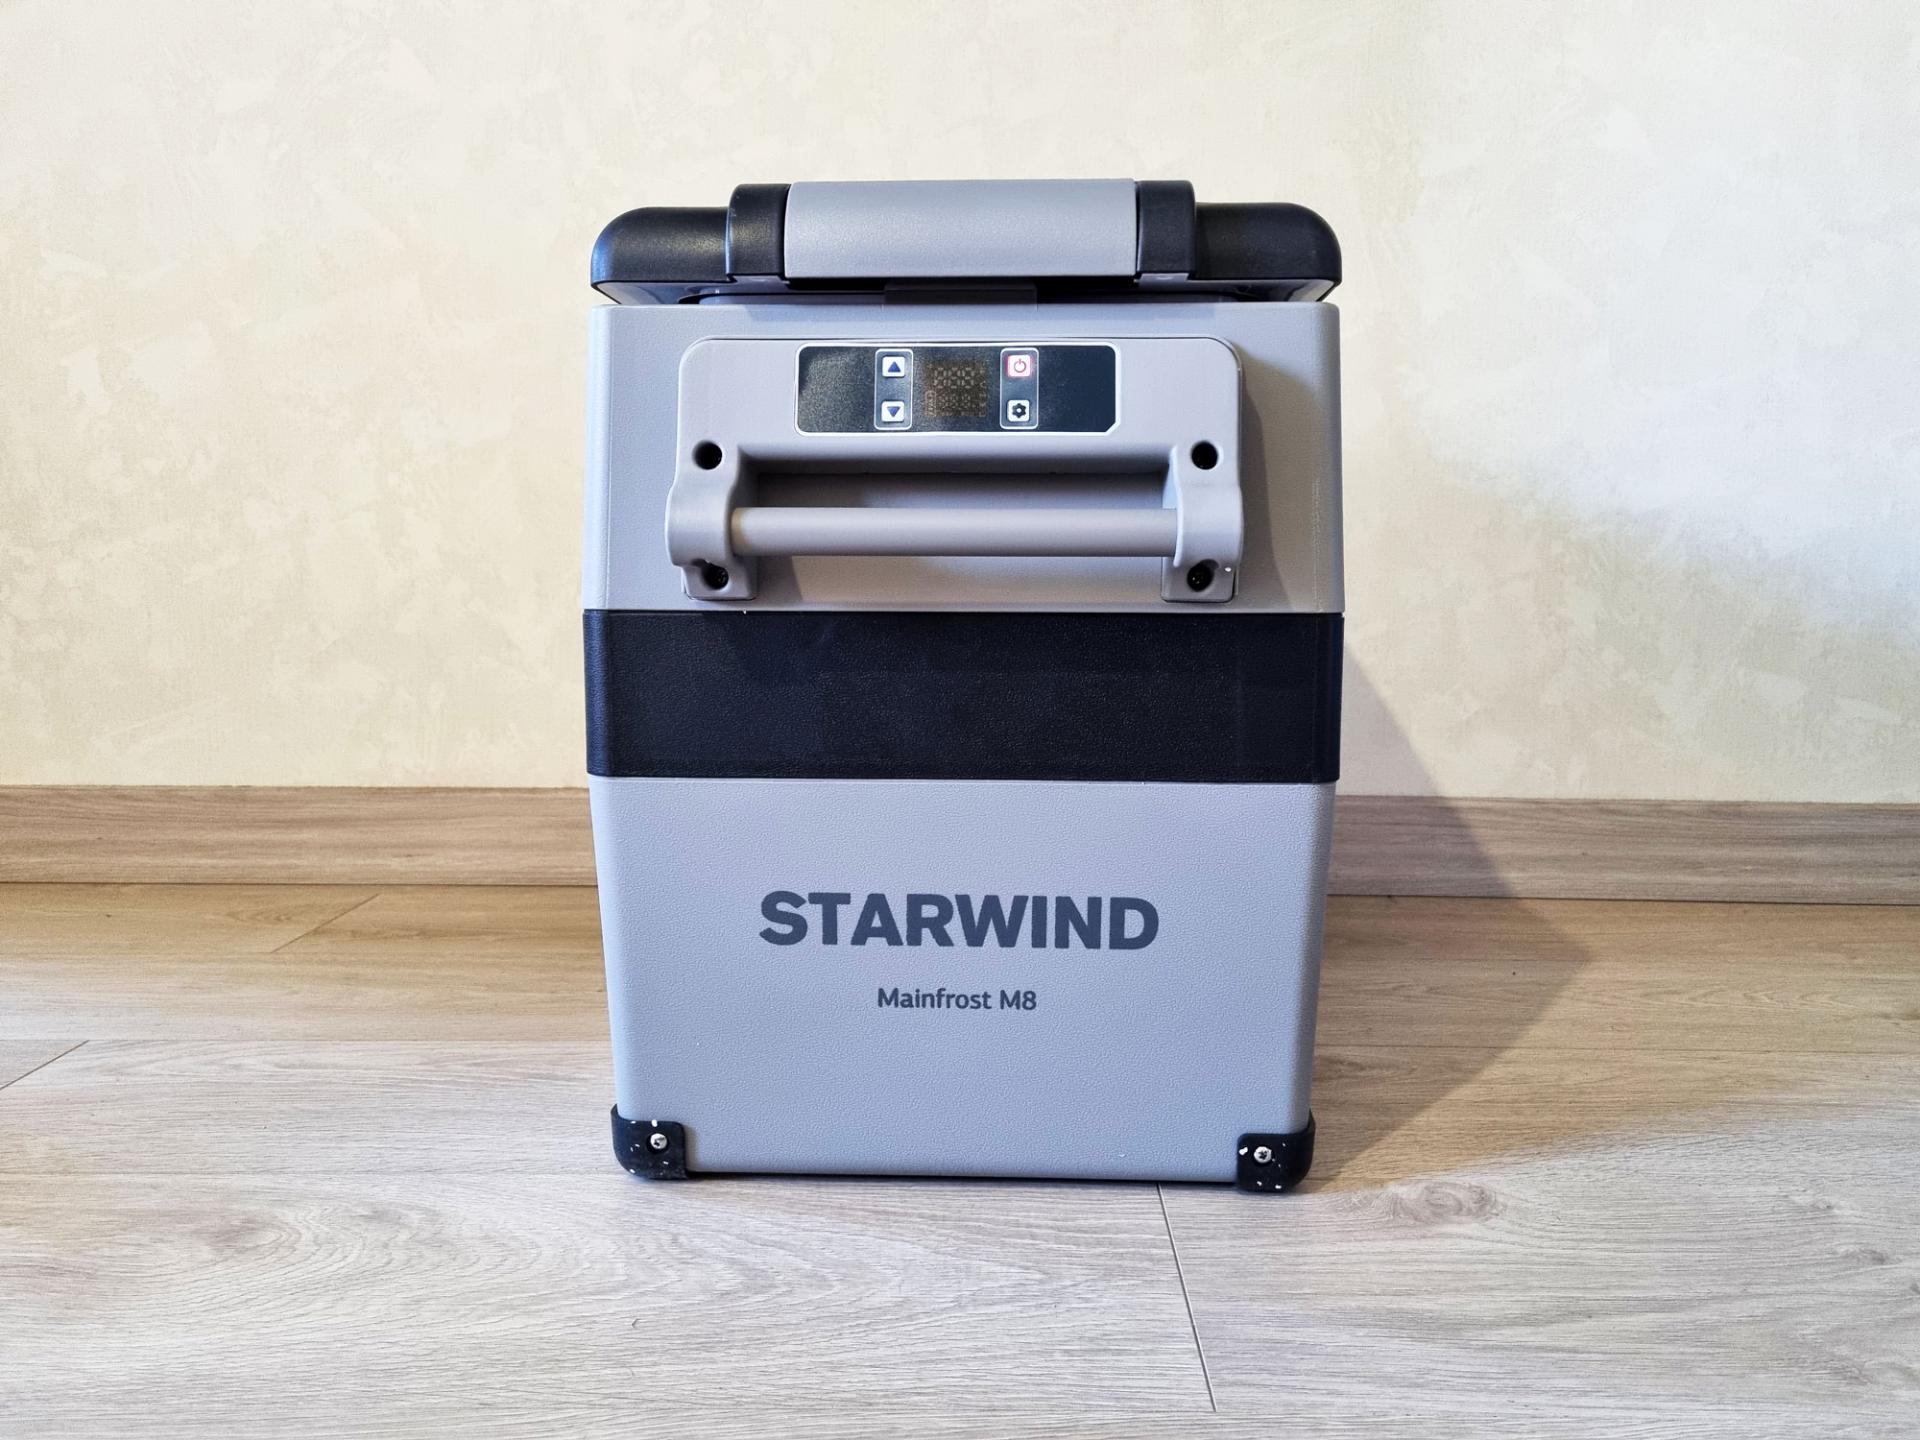 Тест-драйв автохолодильника Starwind Mainfrost M8